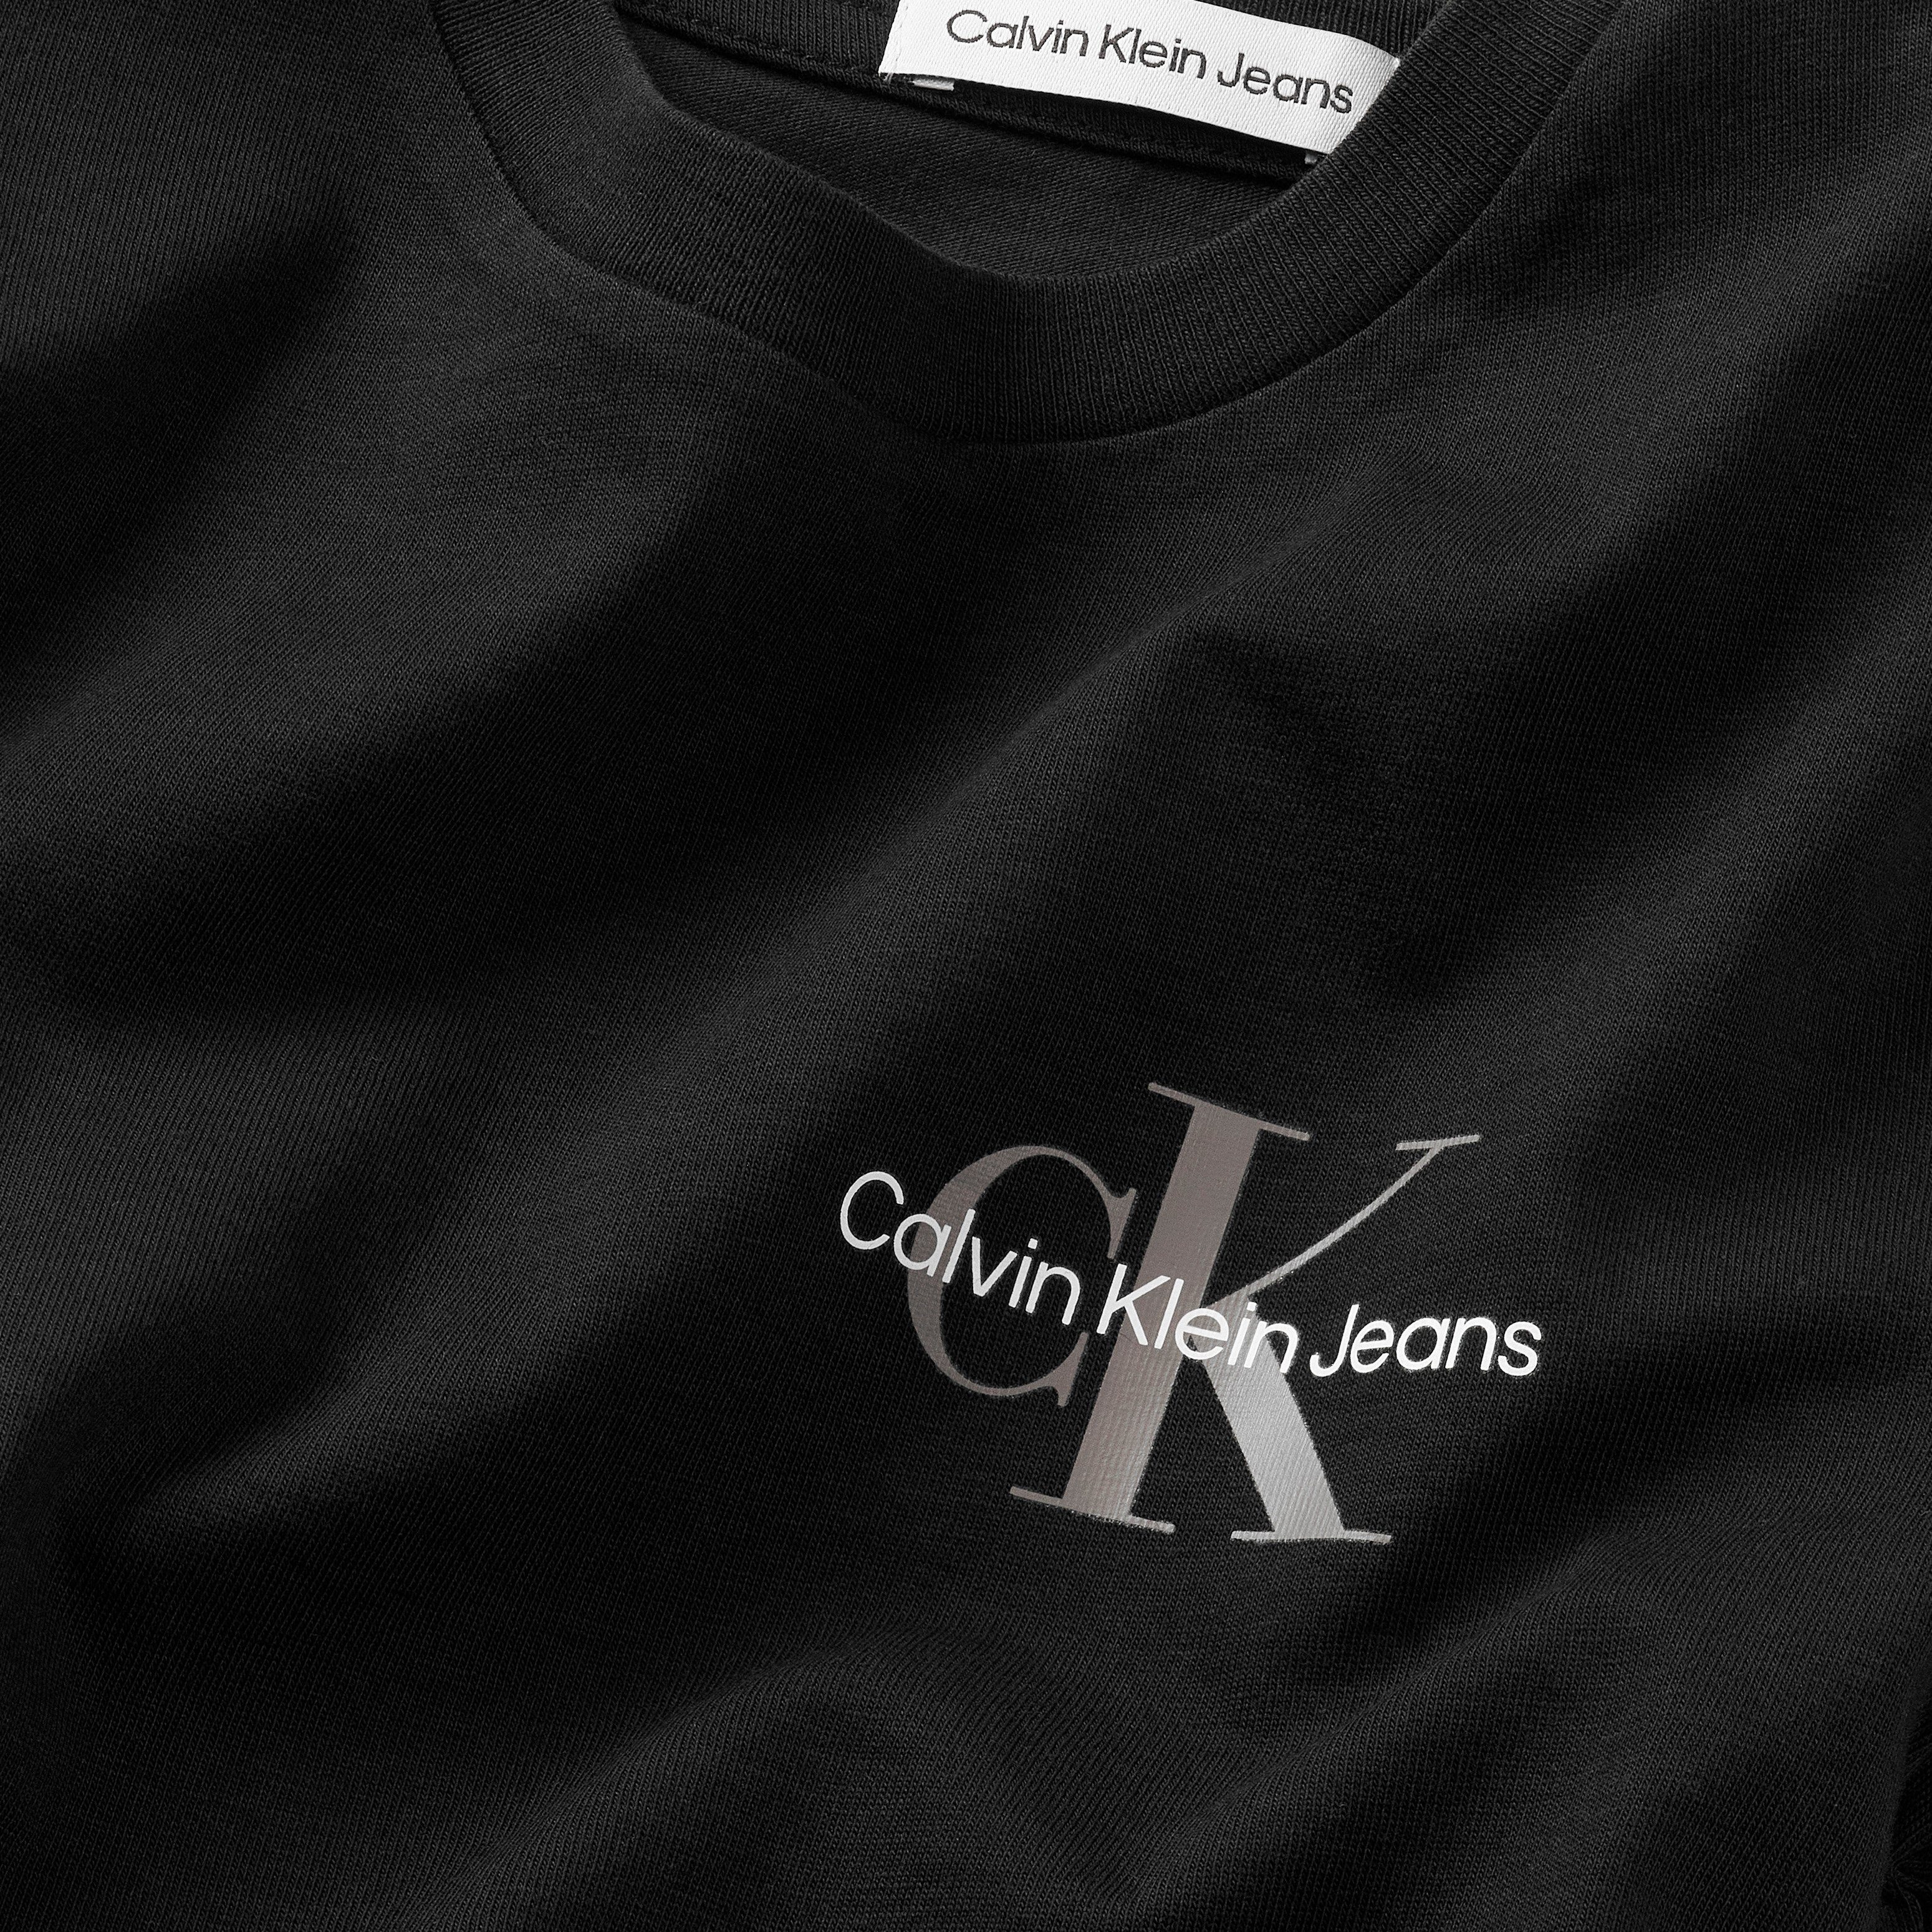 Klein TOP Black Calvin MONOGRAM Jeans Ck CHEST T-Shirt